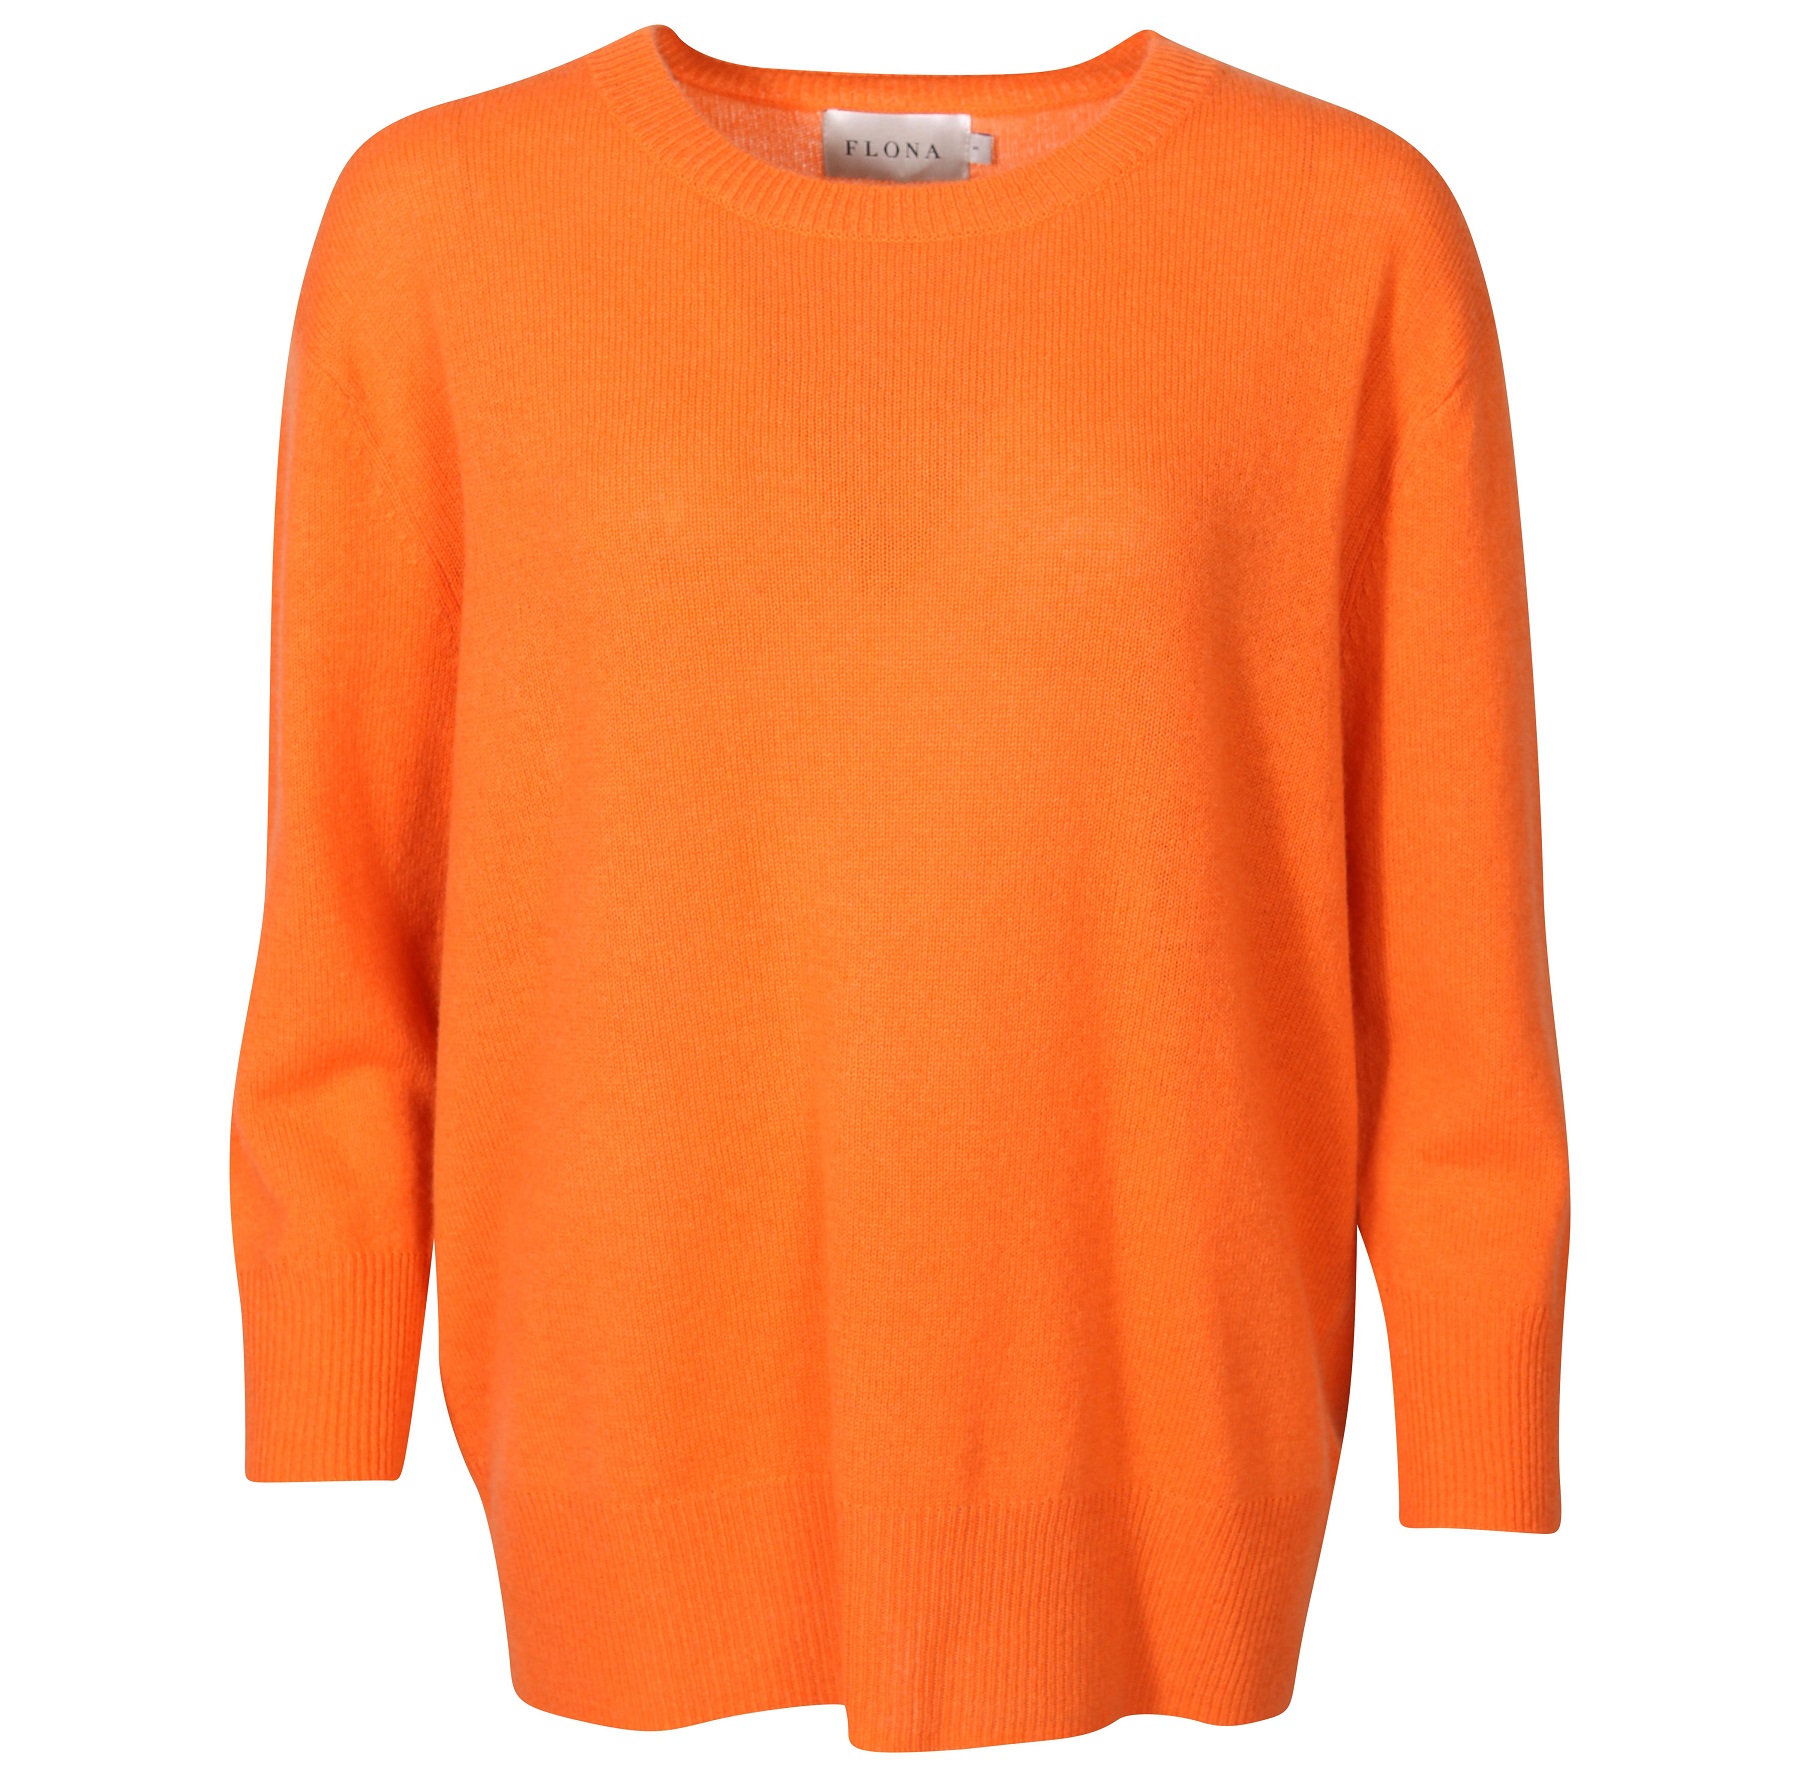 FLONA Cashmere Pullover in Orange